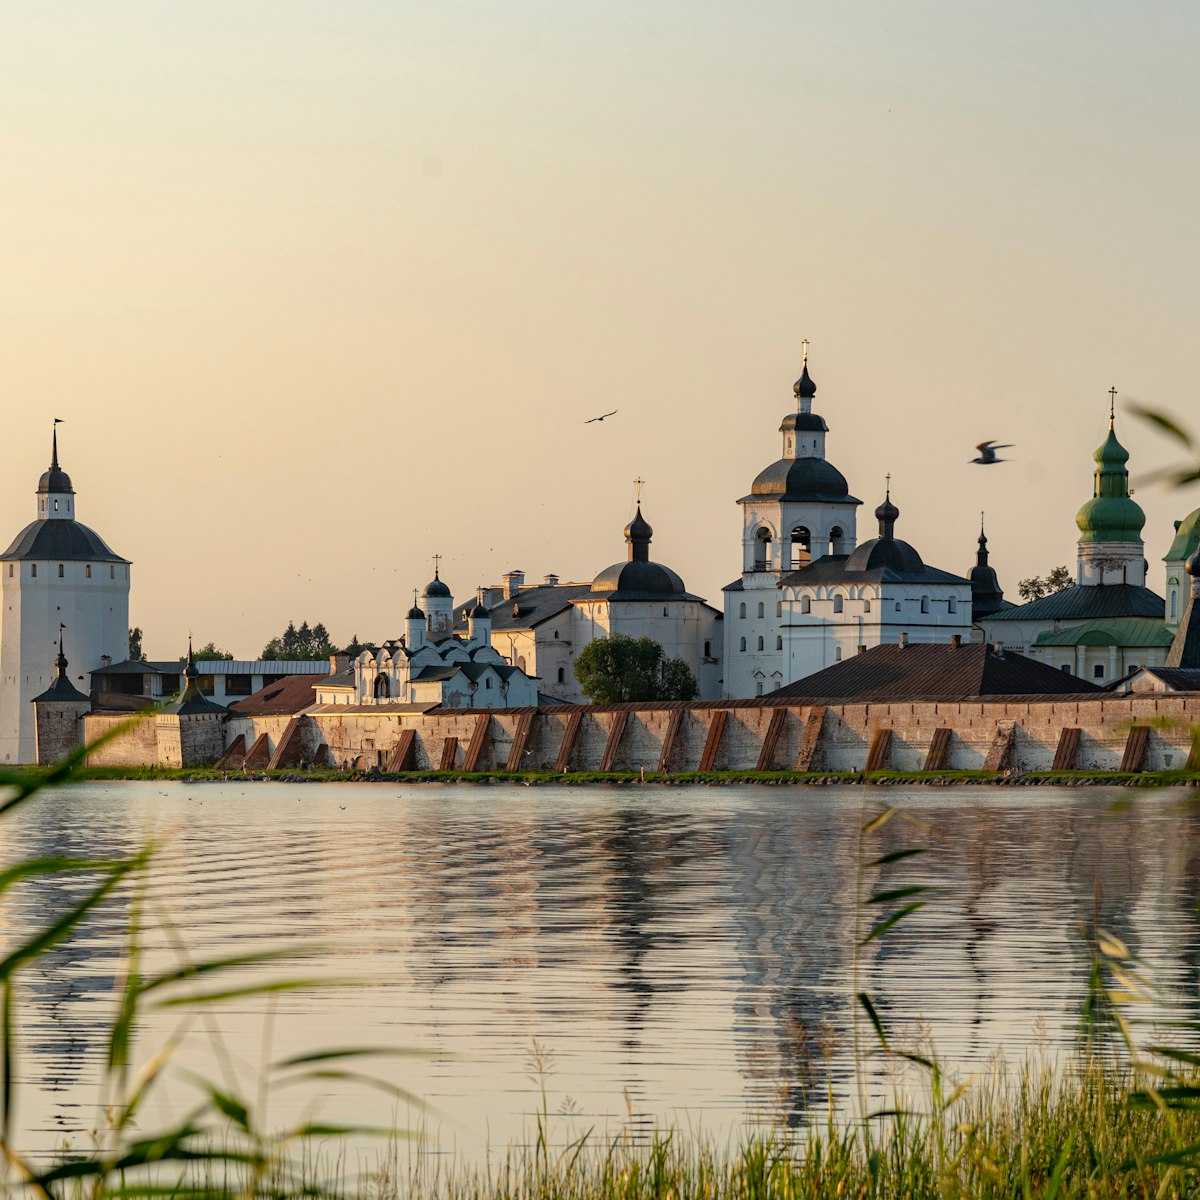 Kirillo Belozersky monastery in the Vologda region of Russia.